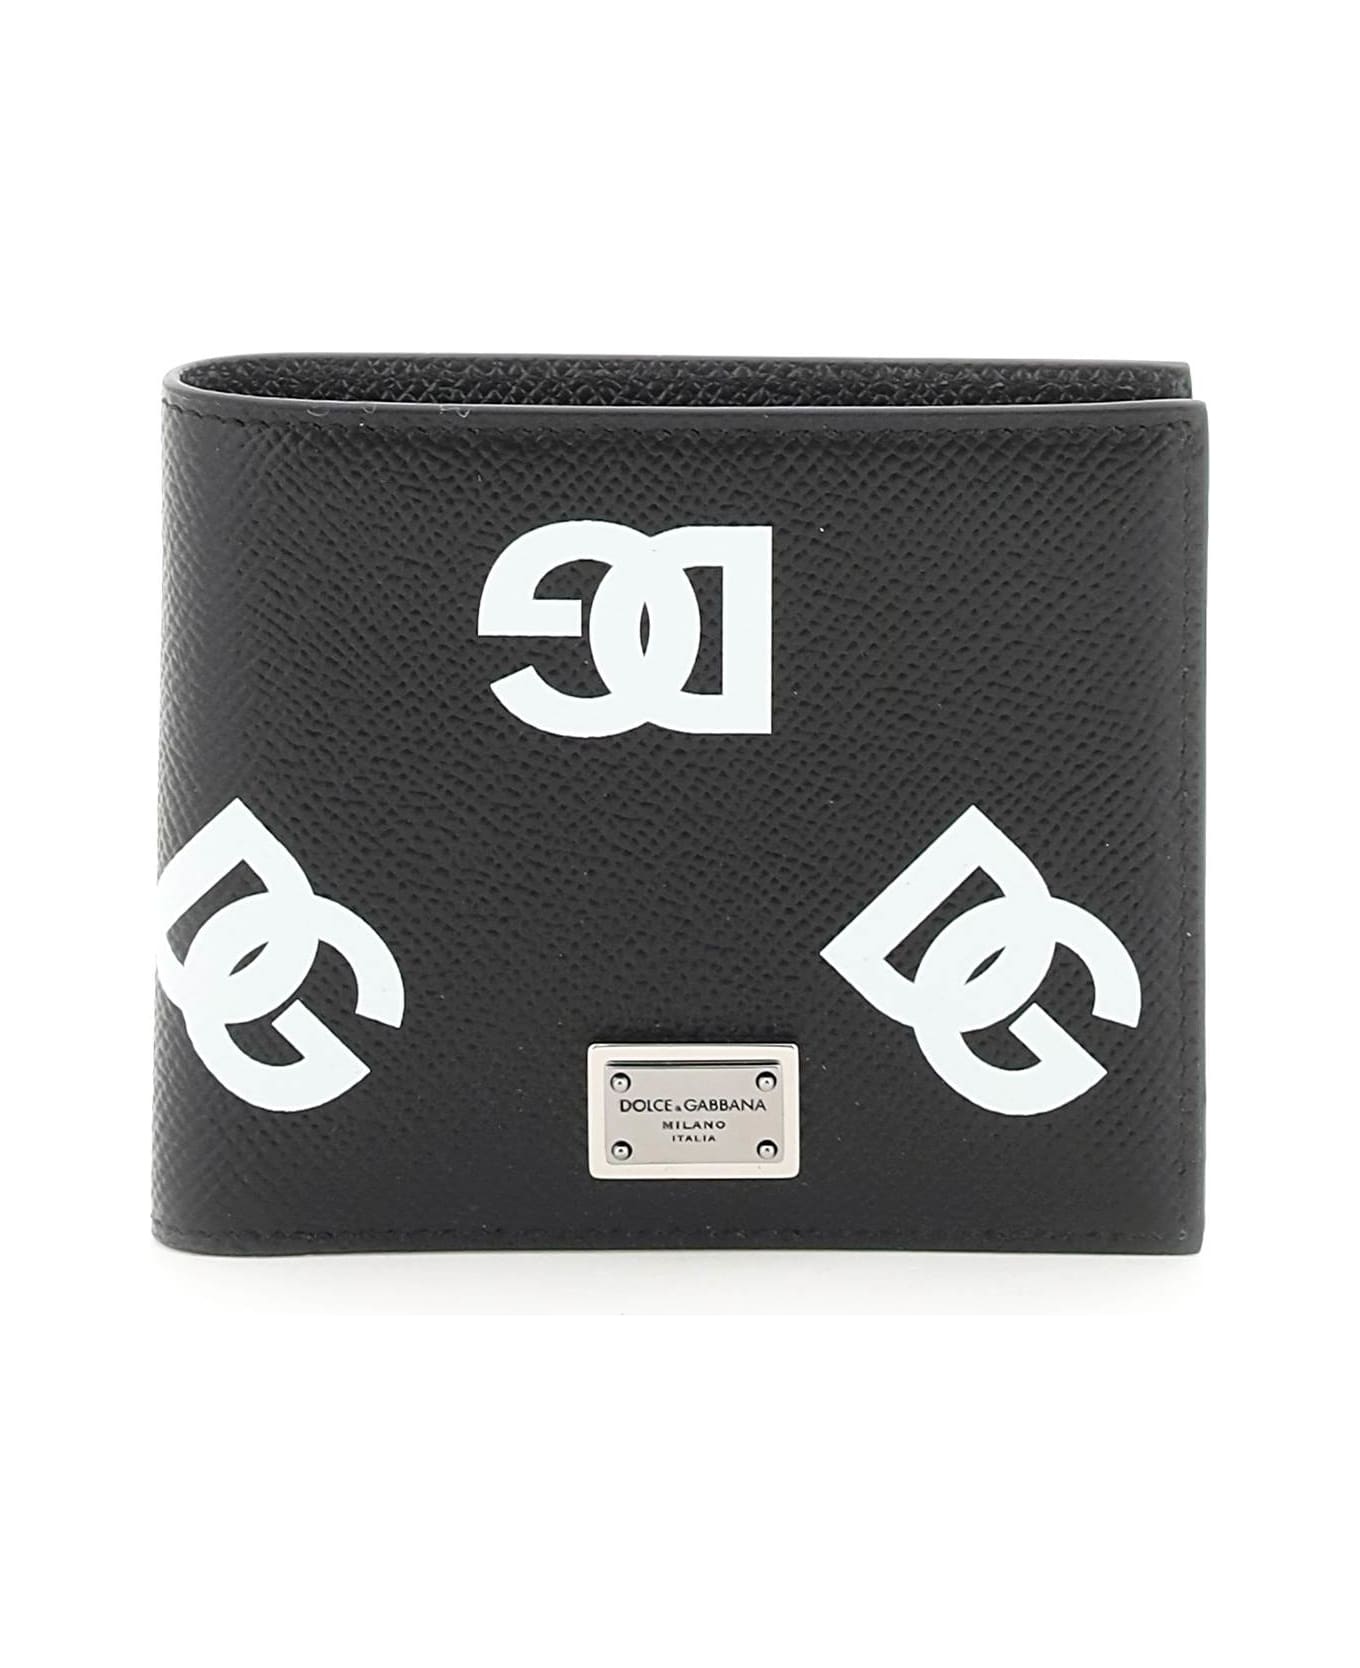 Dolce & Gabbana Leather Wallet - black 財布